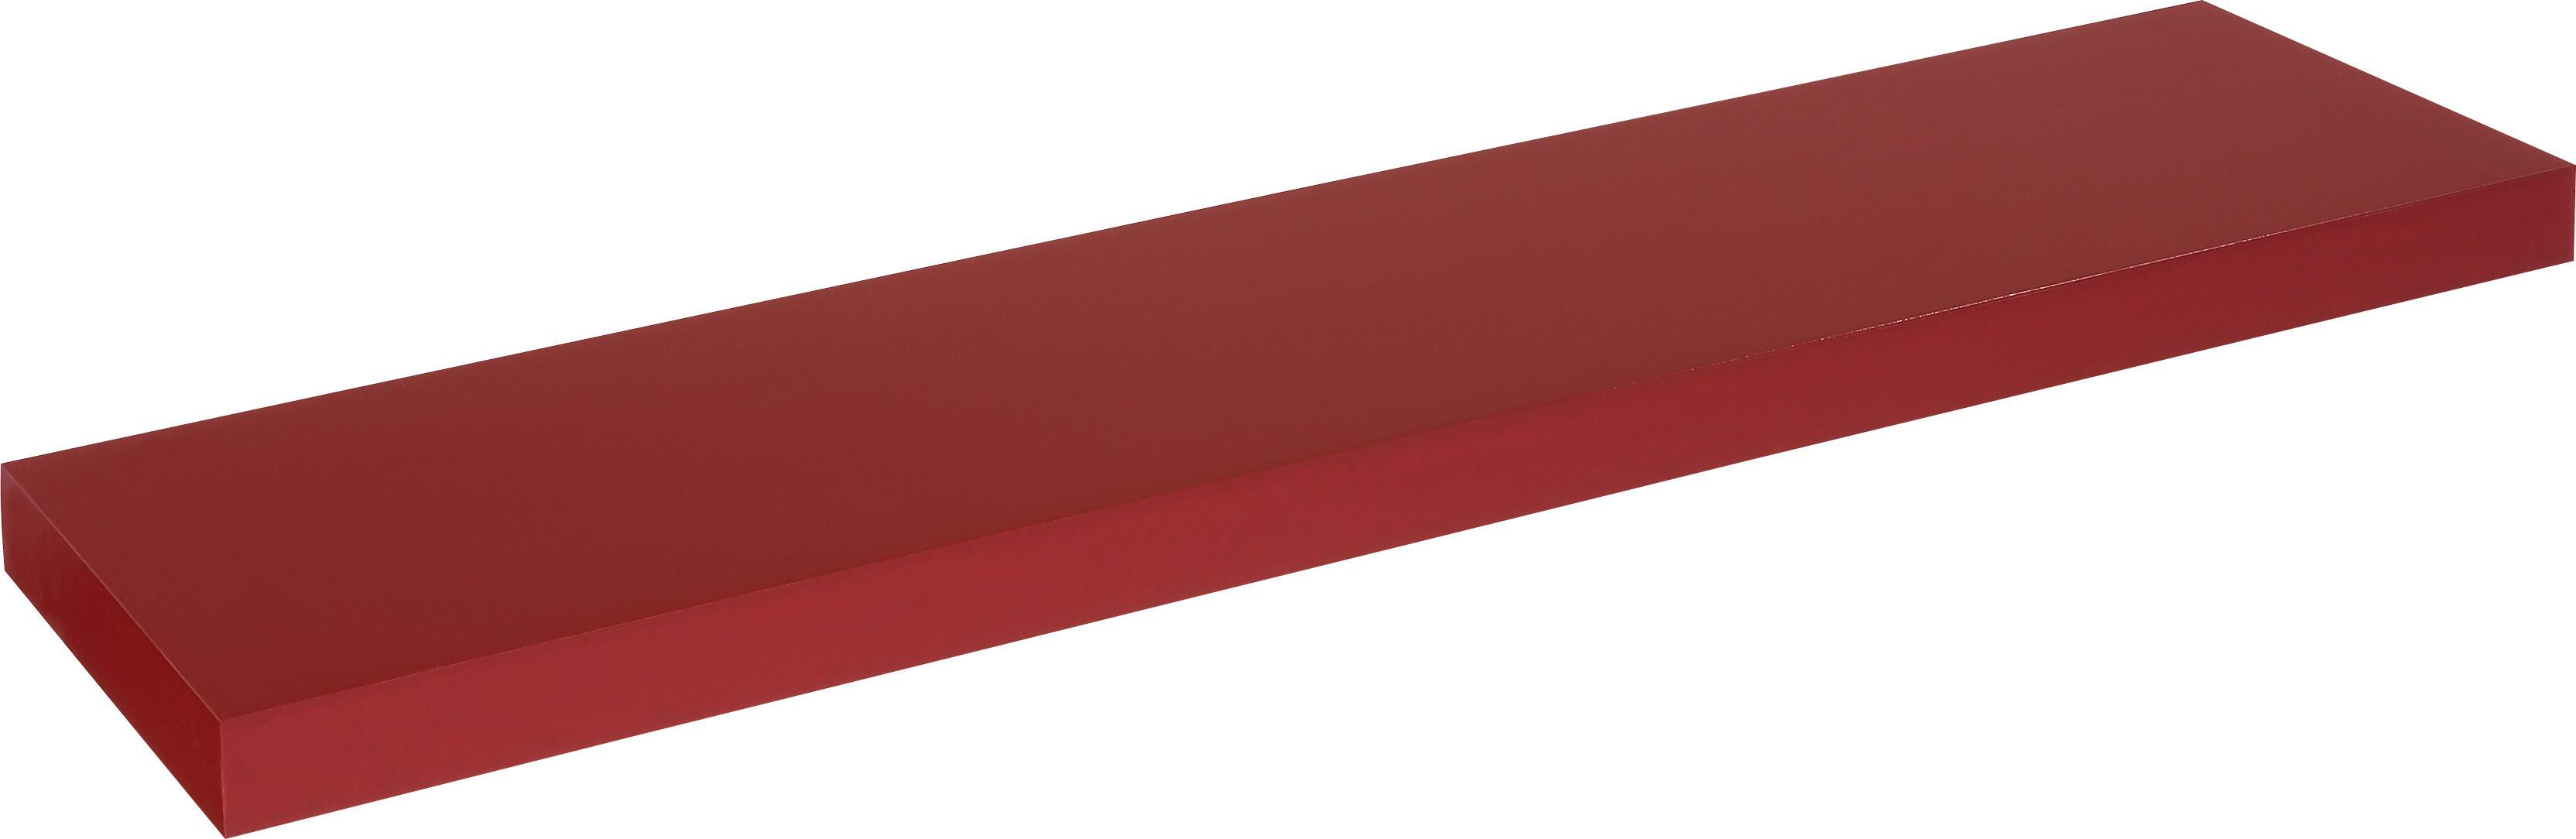 Stenska Polica Anja - rdeča, leseni material (100/4,5/24cm) - Modern Living